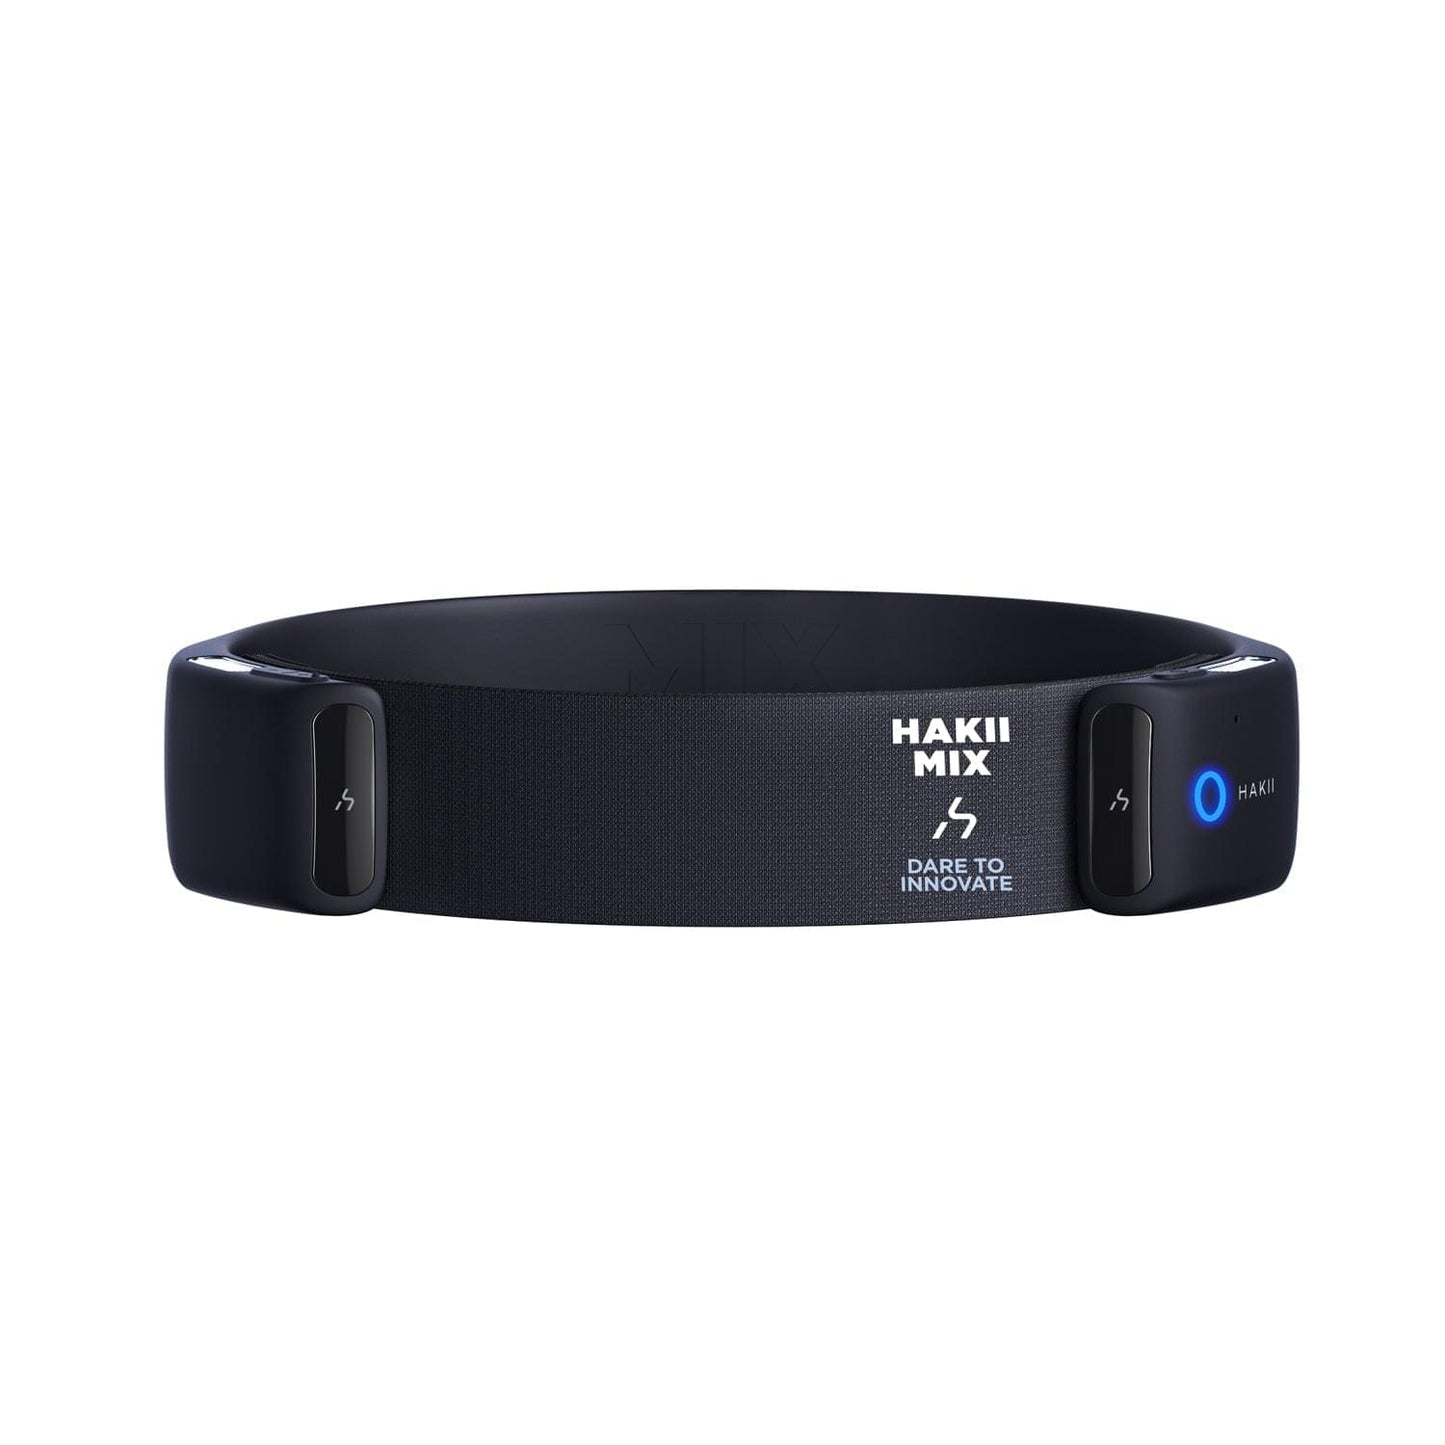 HAKII Mix Smart Headband Headphones for Sports (Black)